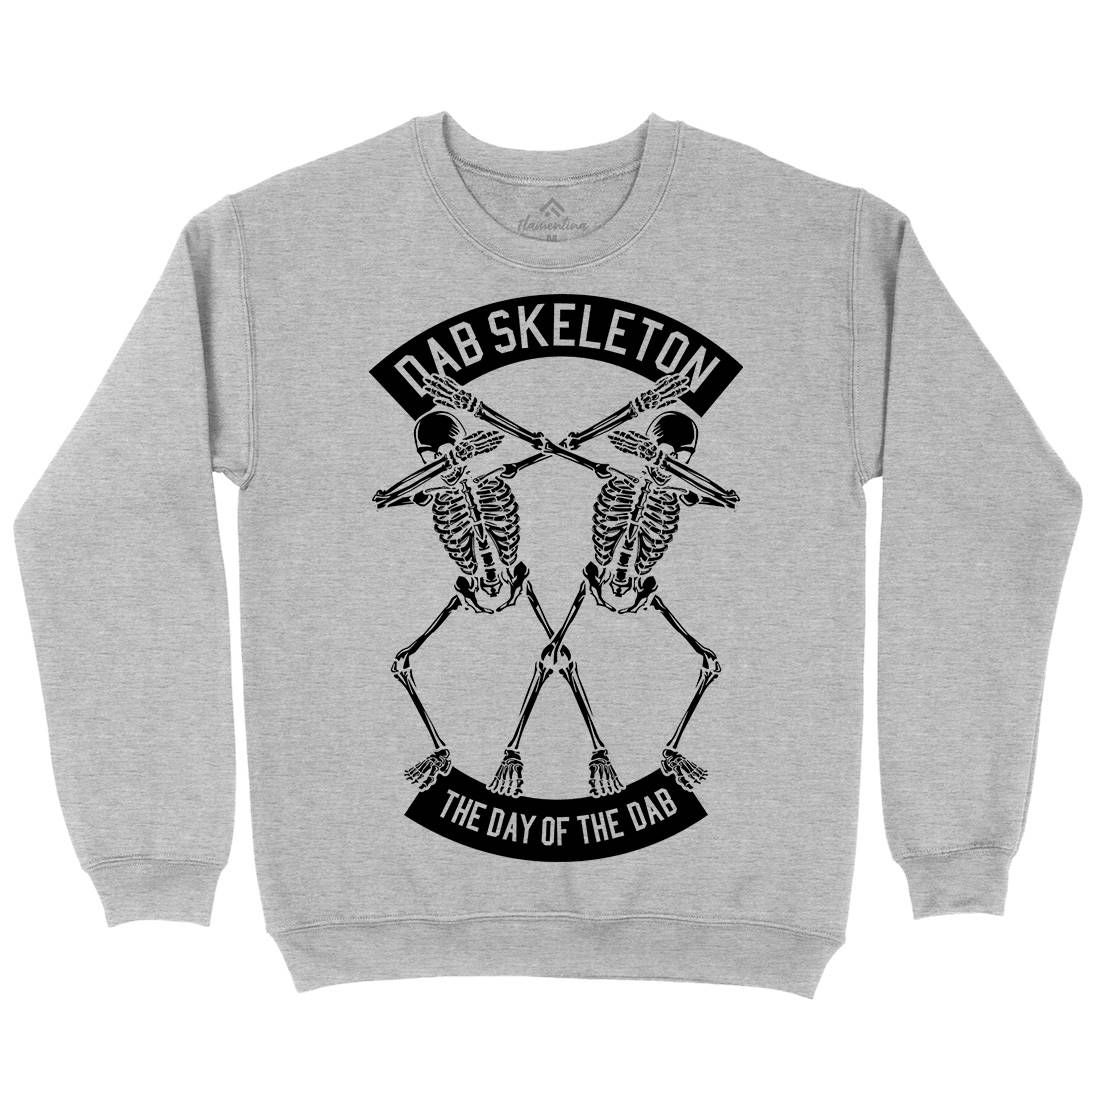 Dab Skeleton Kids Crew Neck Sweatshirt Music B524